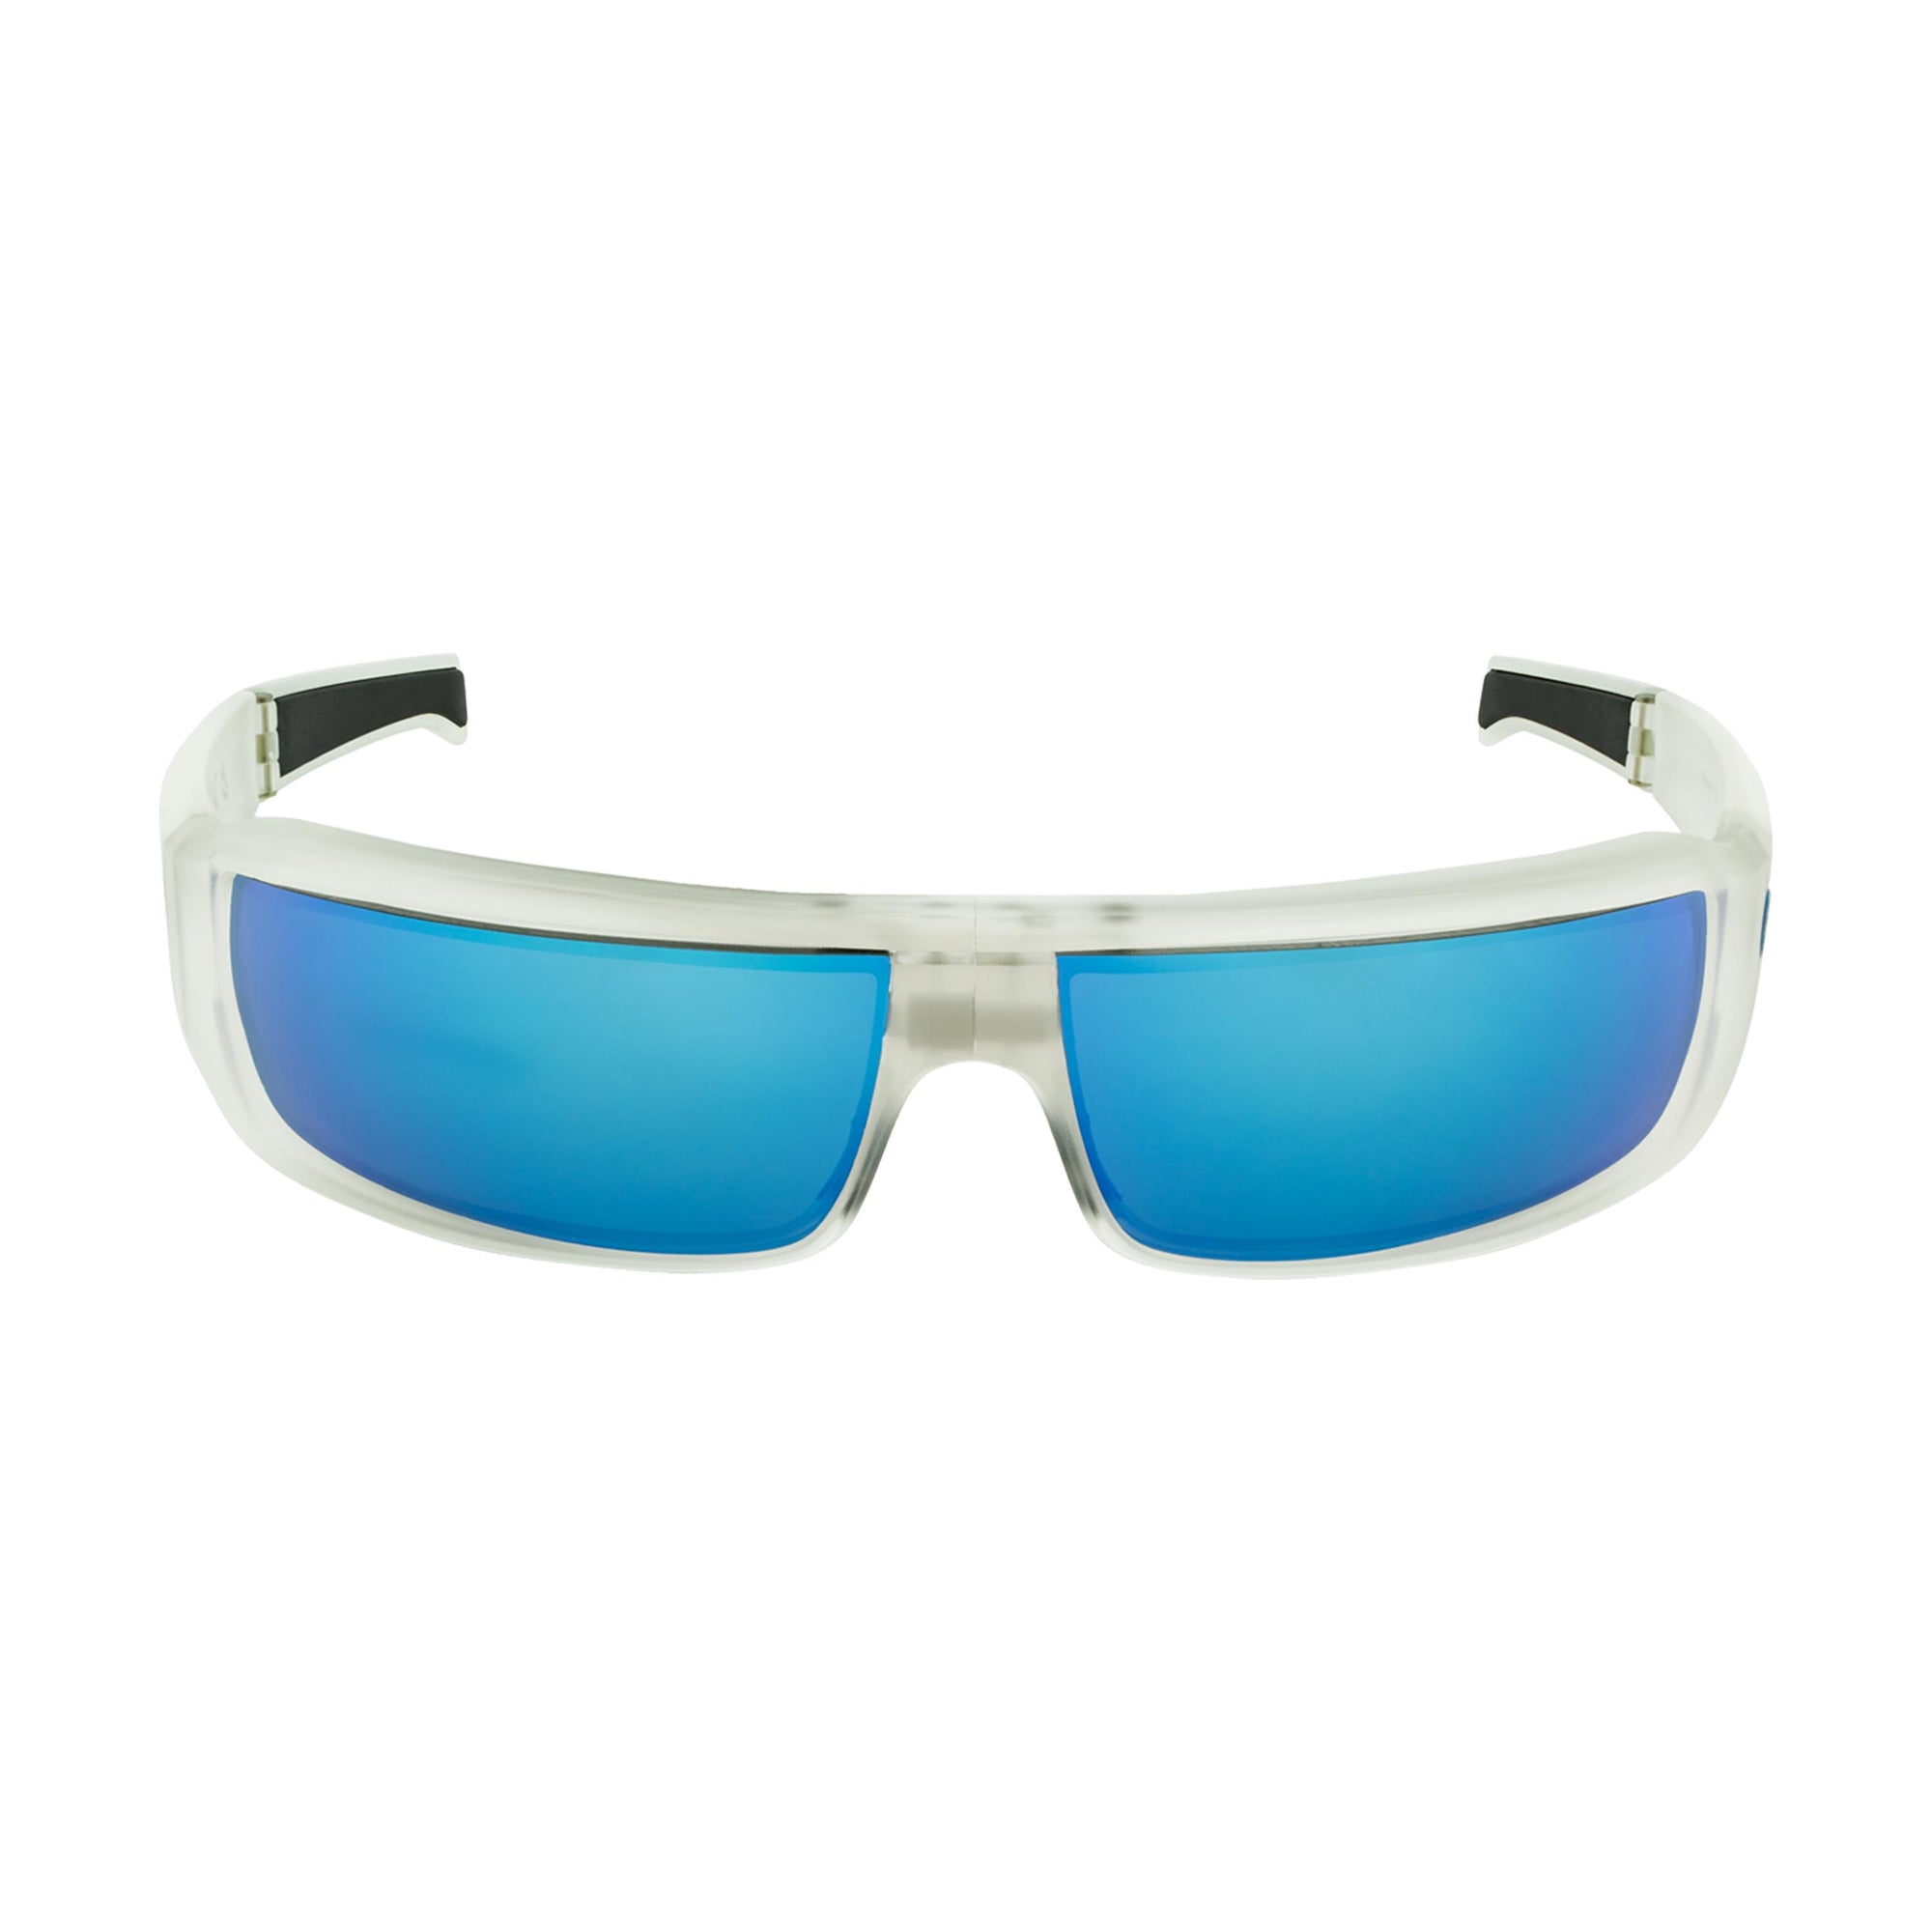 Popticals, Premium Compact Sunglasses, PopSign, 010020-XYUN, Polarized Sunglasses, Matte Crystal Frame, Gray Lenses w/Blue Mirror Finish, Glam View